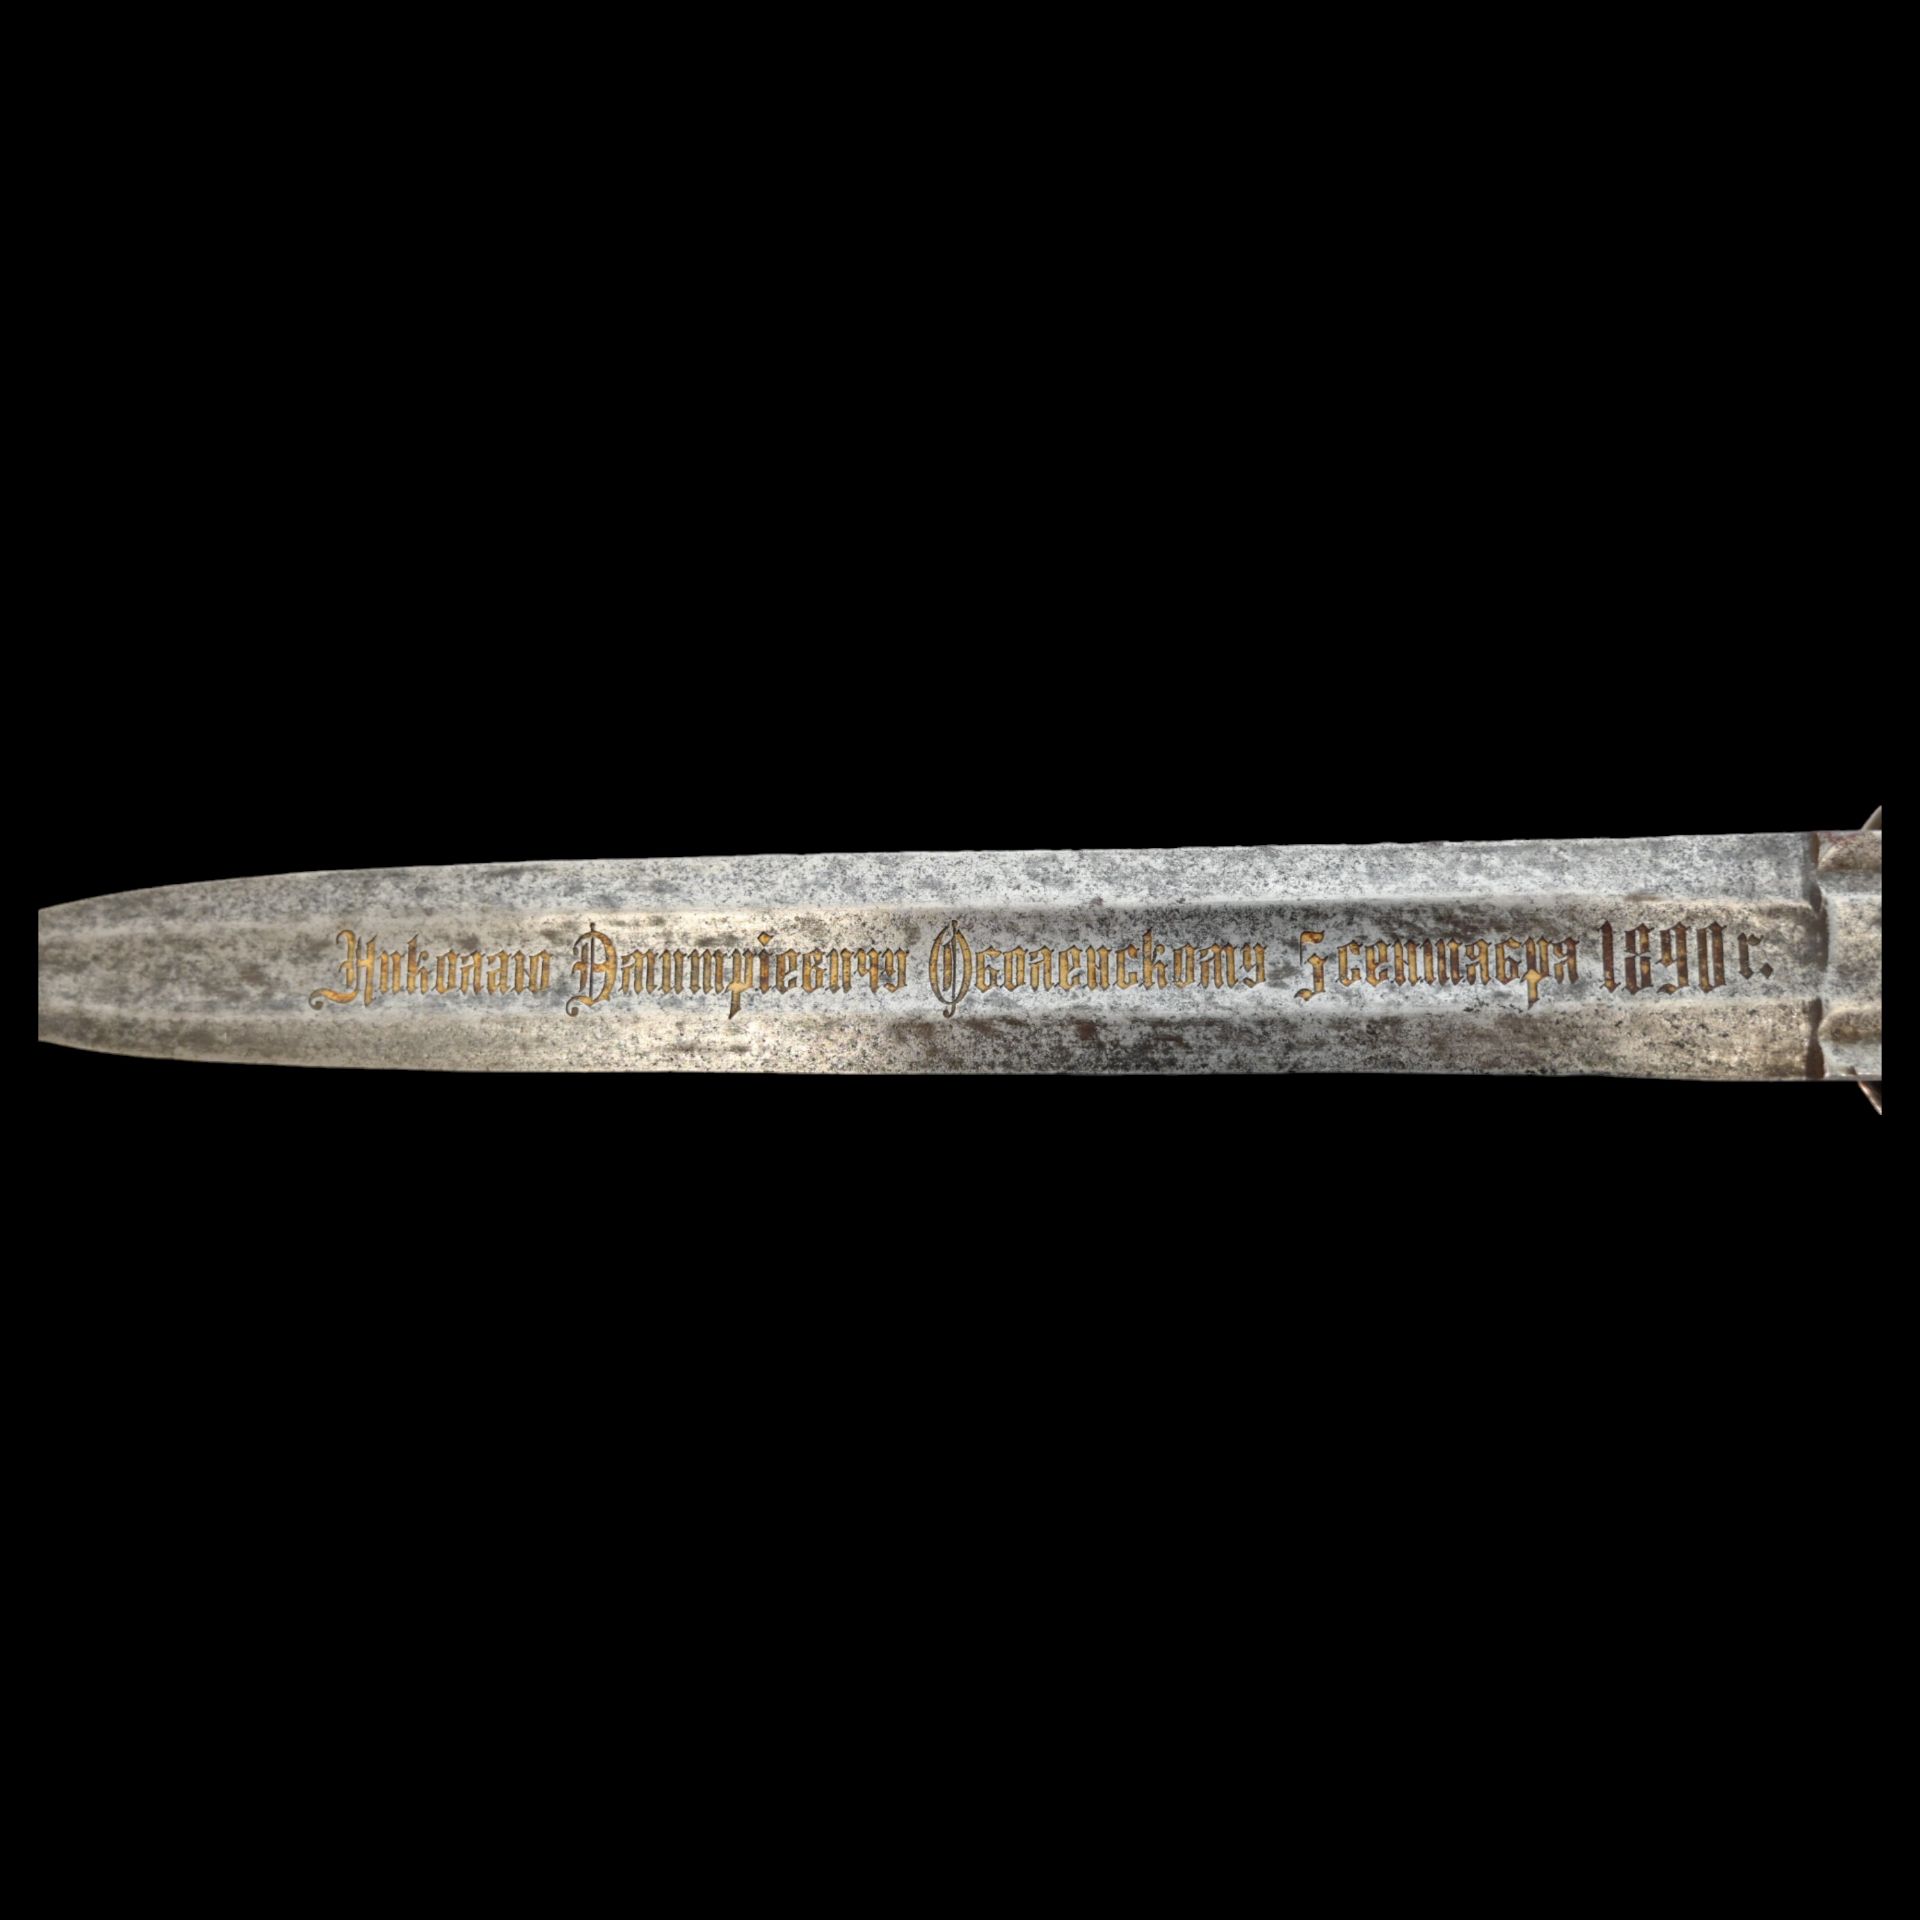 Rare hunting dagger, silver plated, gilding, precious stones, Russian Empire, 1890. - Image 11 of 29